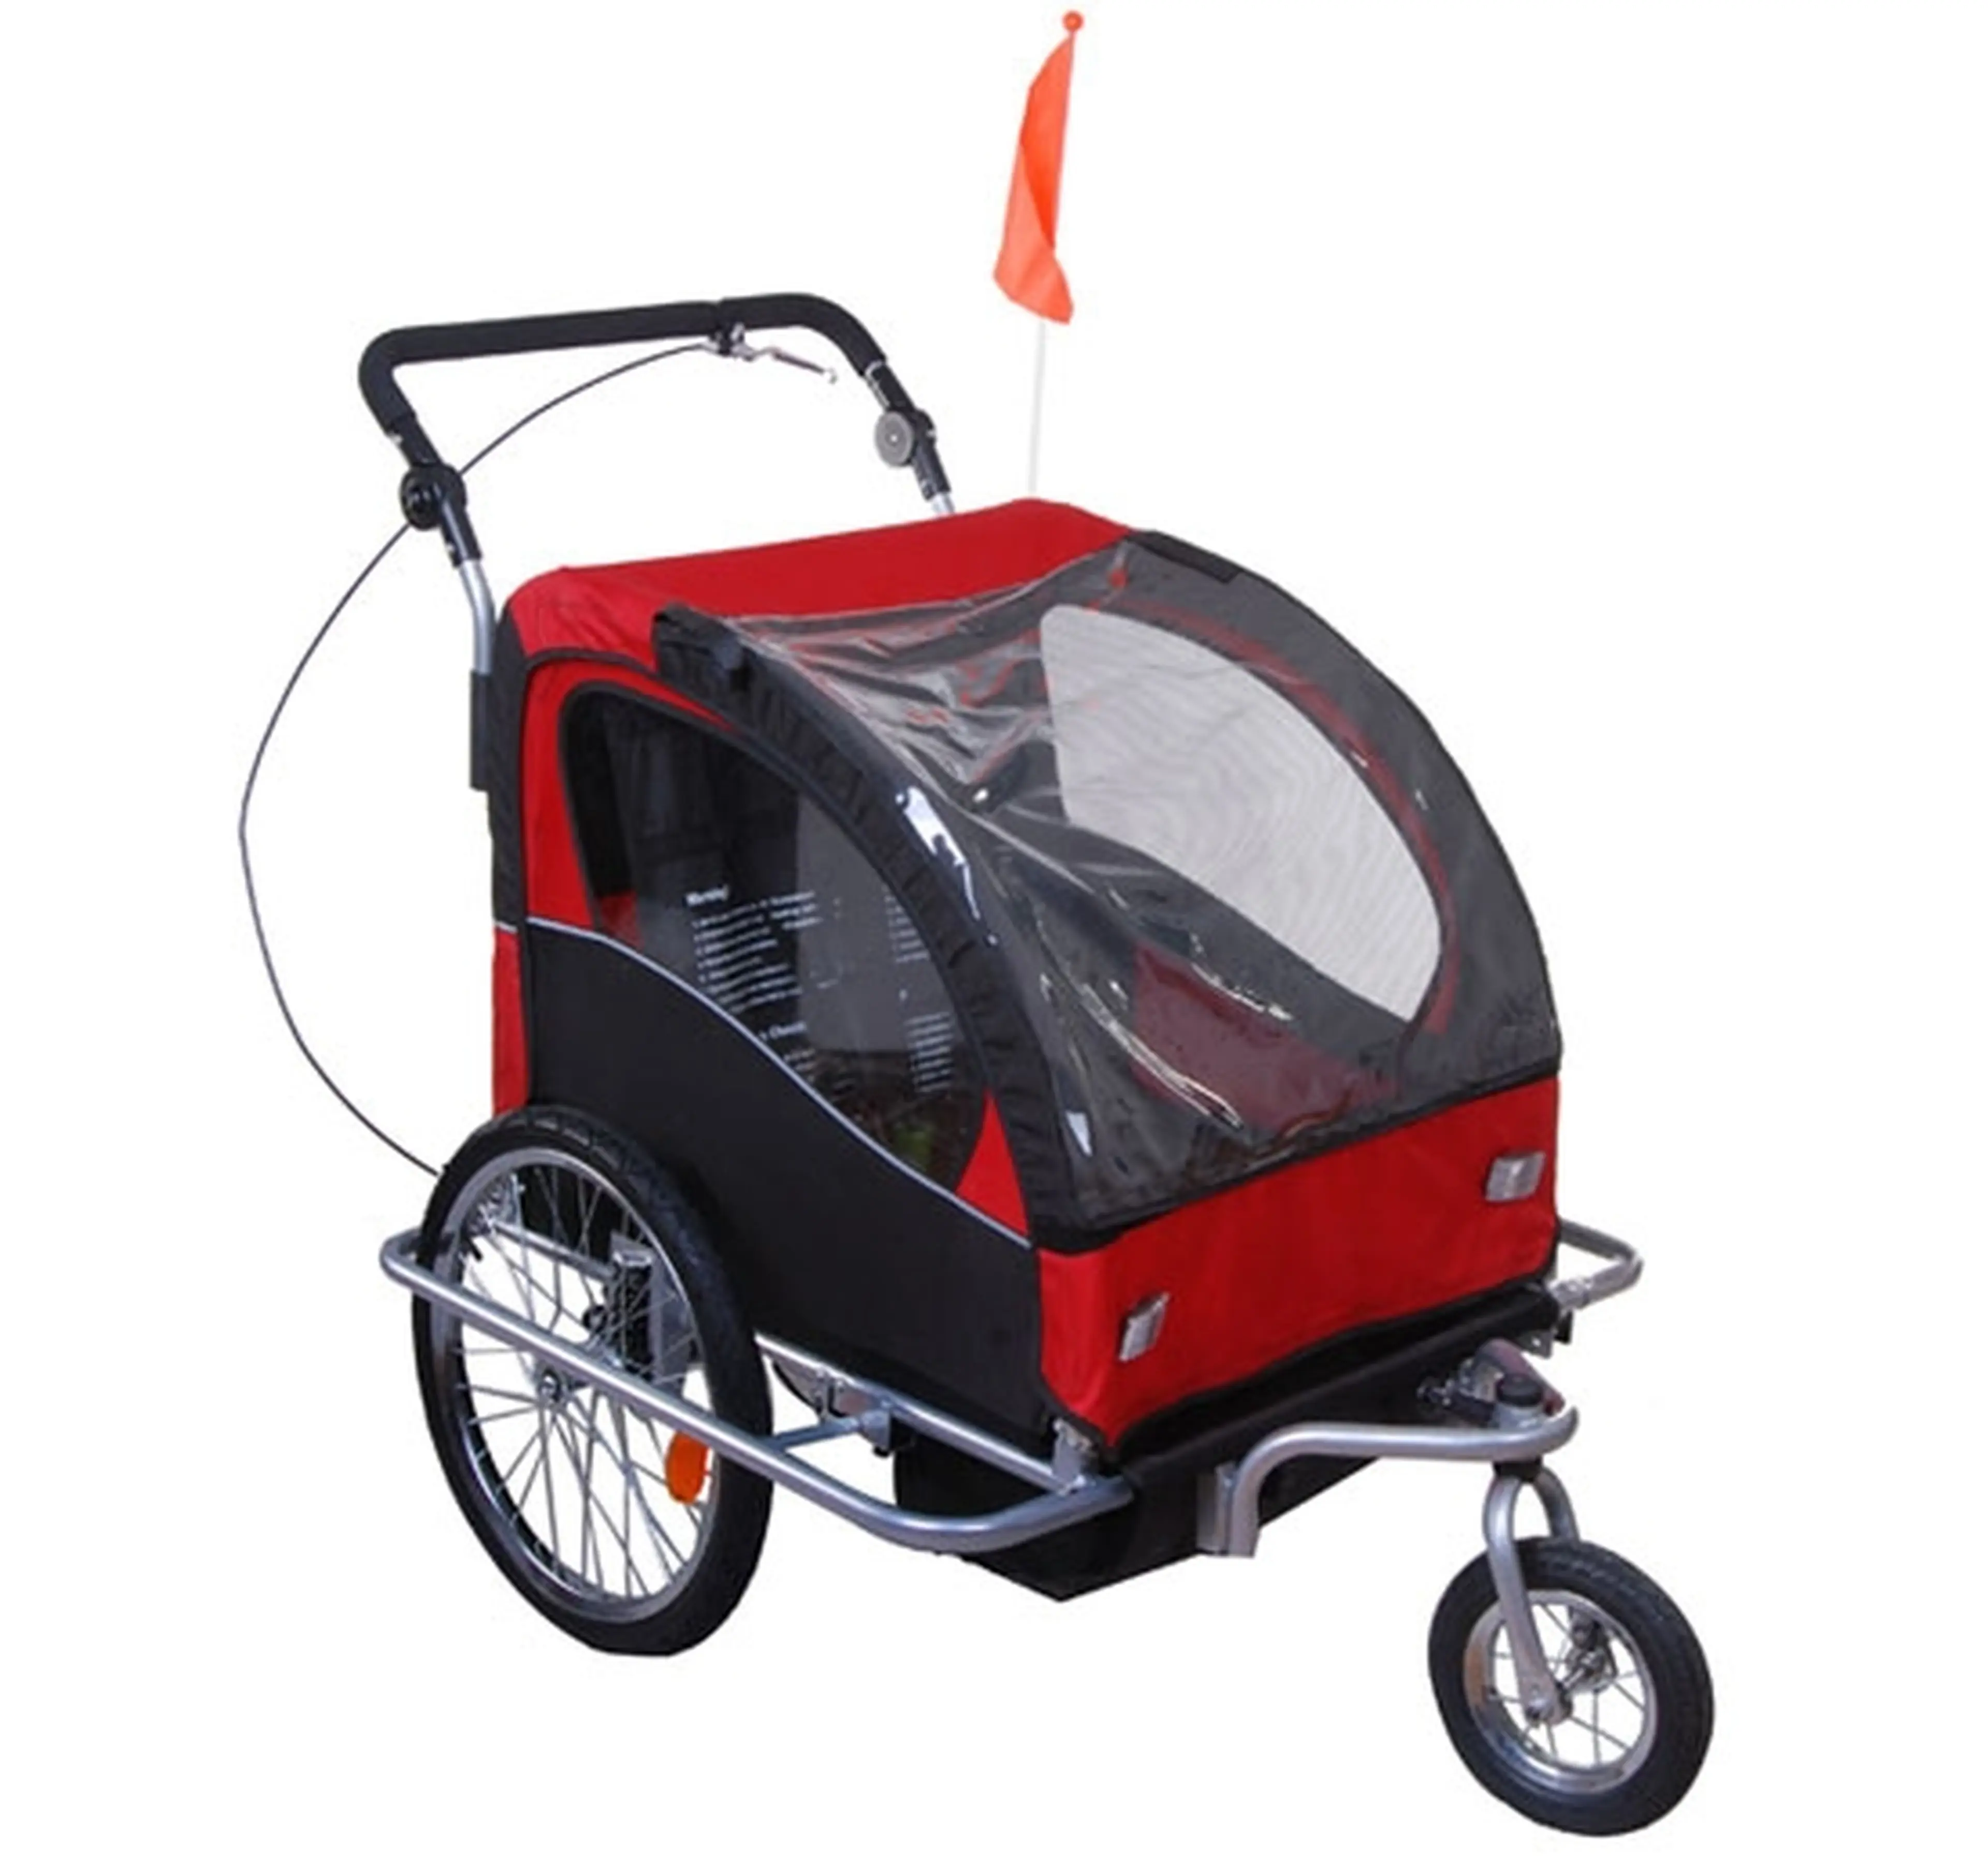 10. Carucior de bicicleta Qaba rosu-negru pentru 1 -2 copii, noua